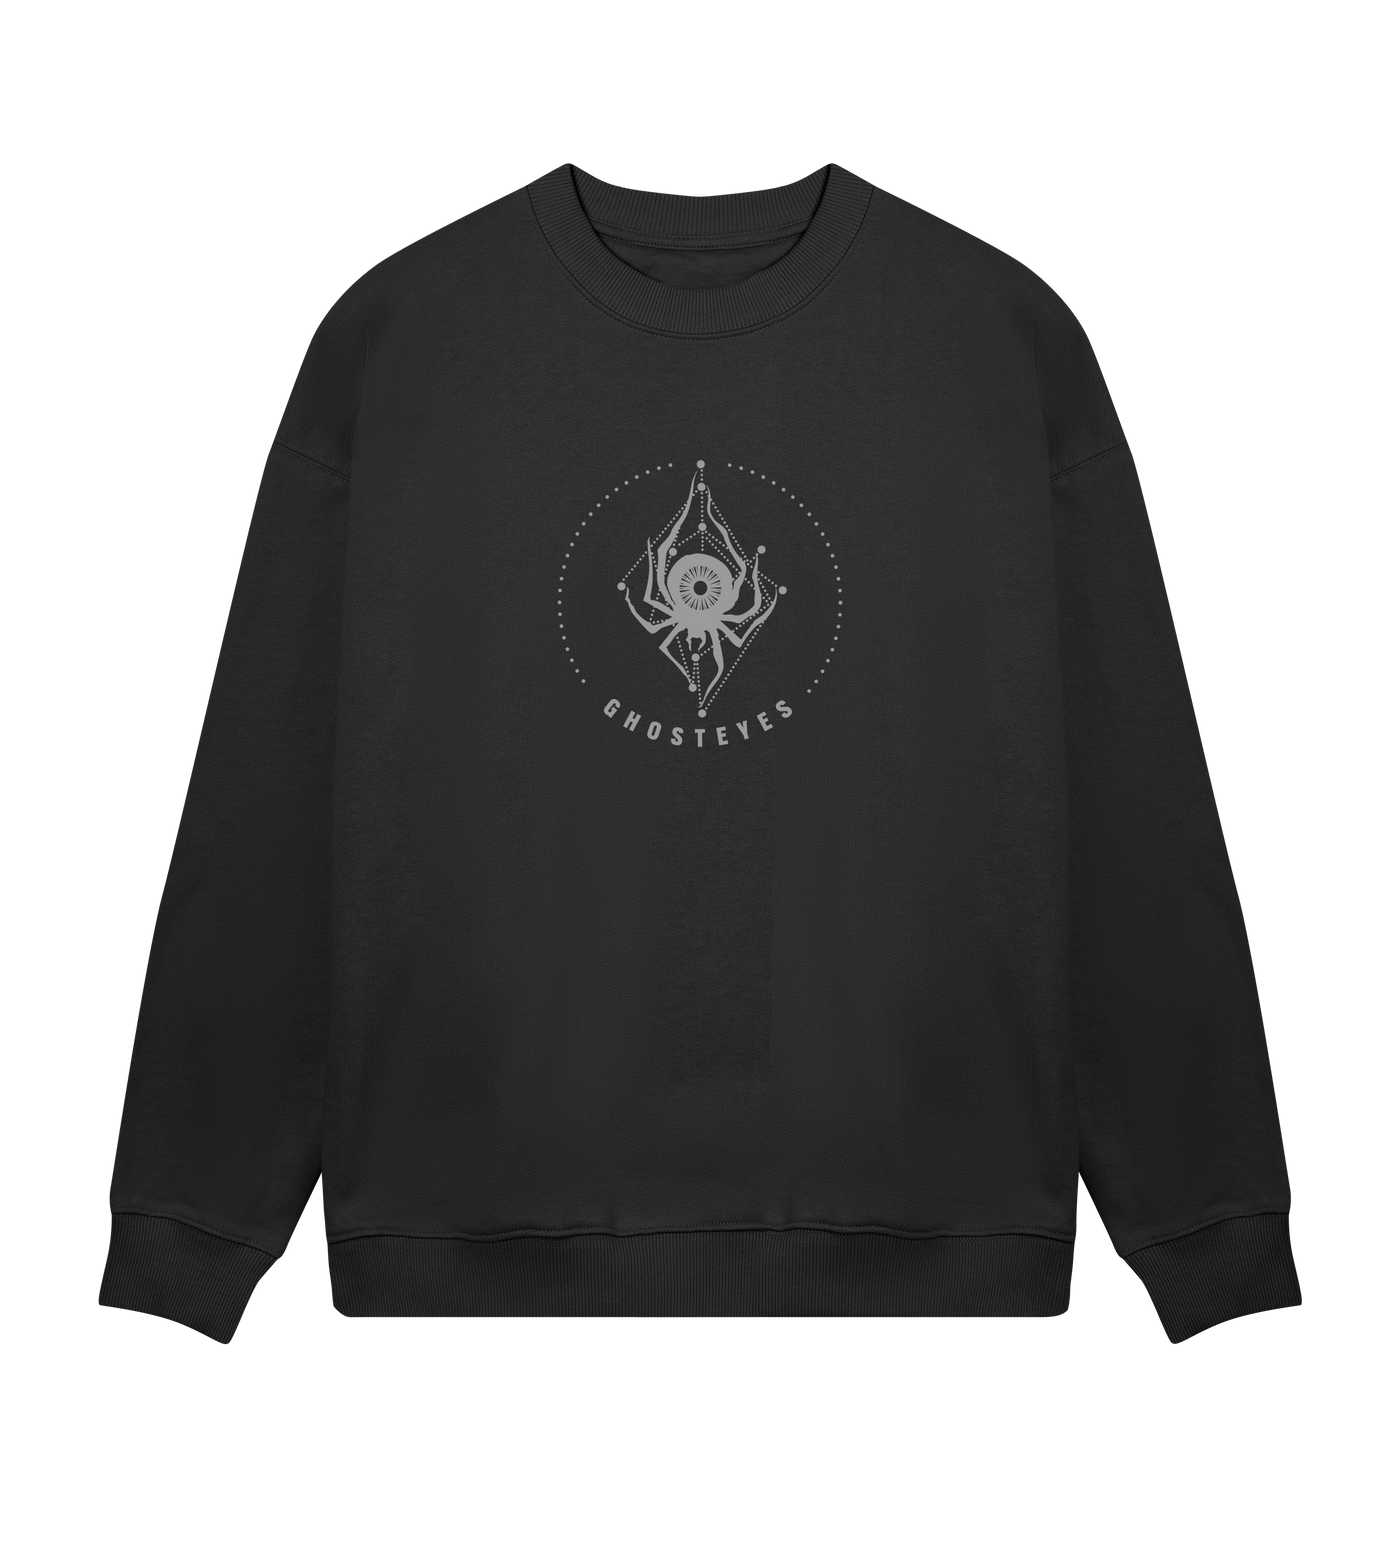 6 SIEGE - Ghosteyes Sweatshirt